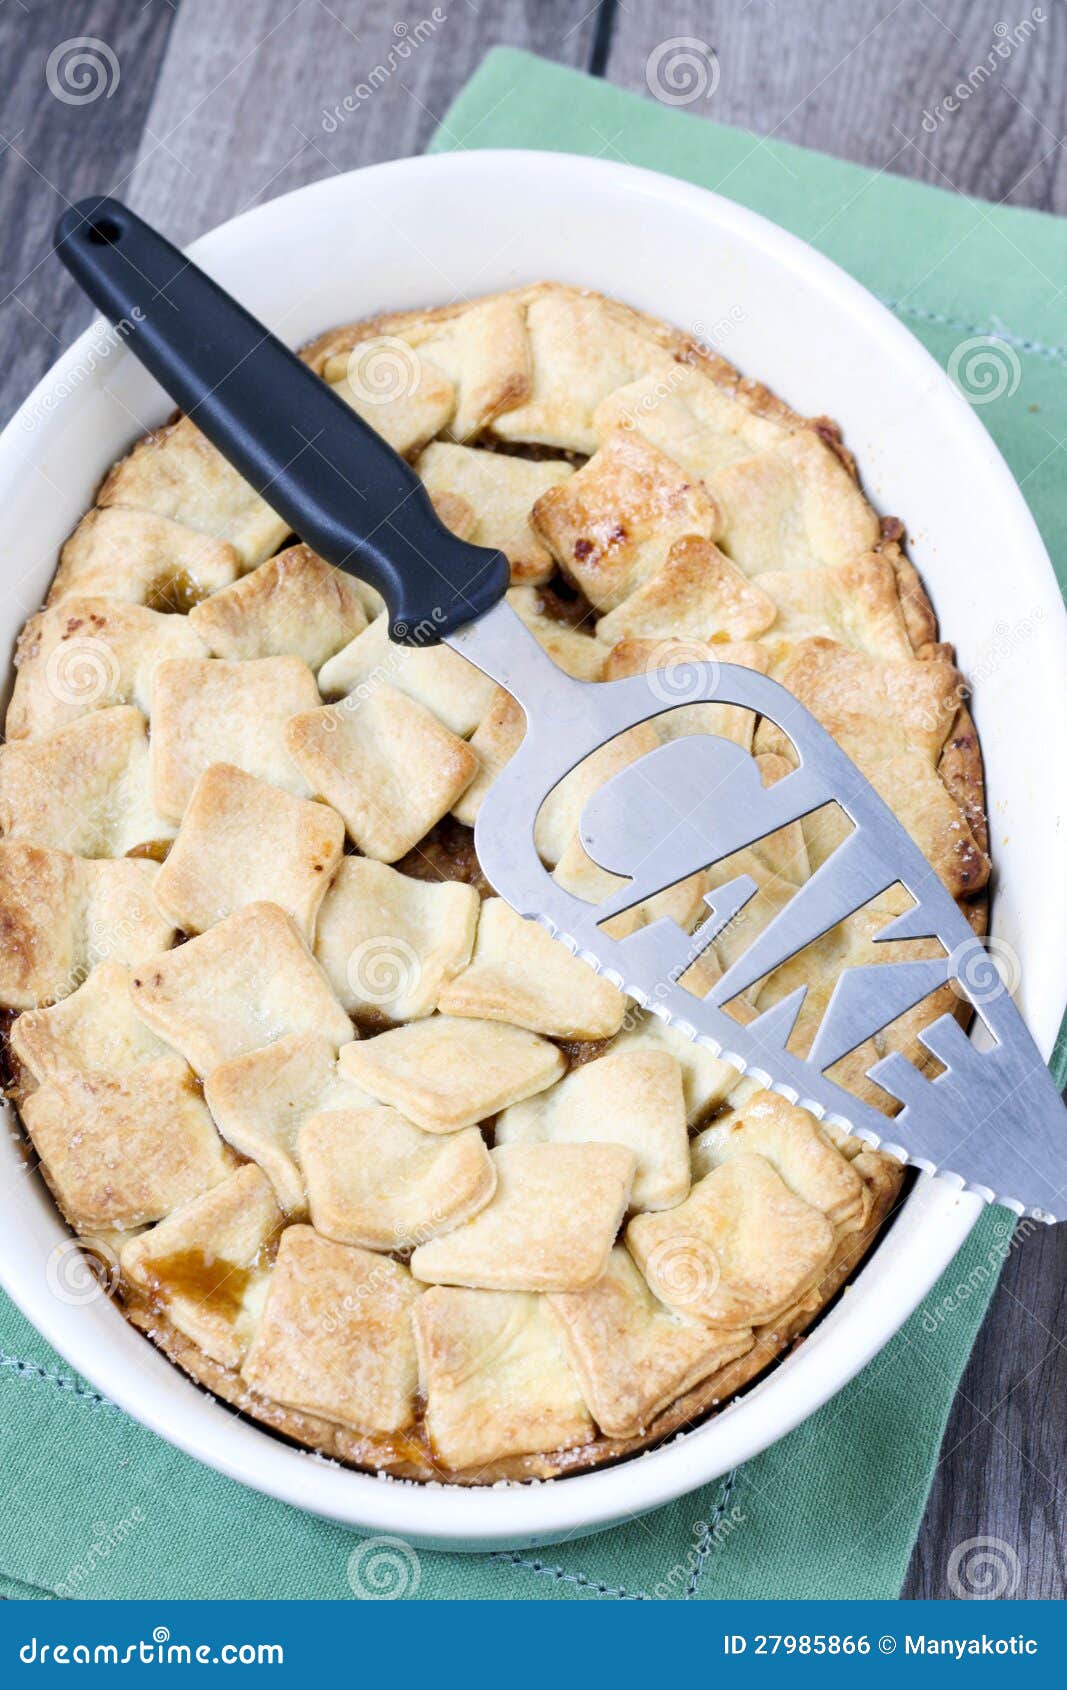 Double crust apple pie stock photo. Image of sweet, cake - 27985866